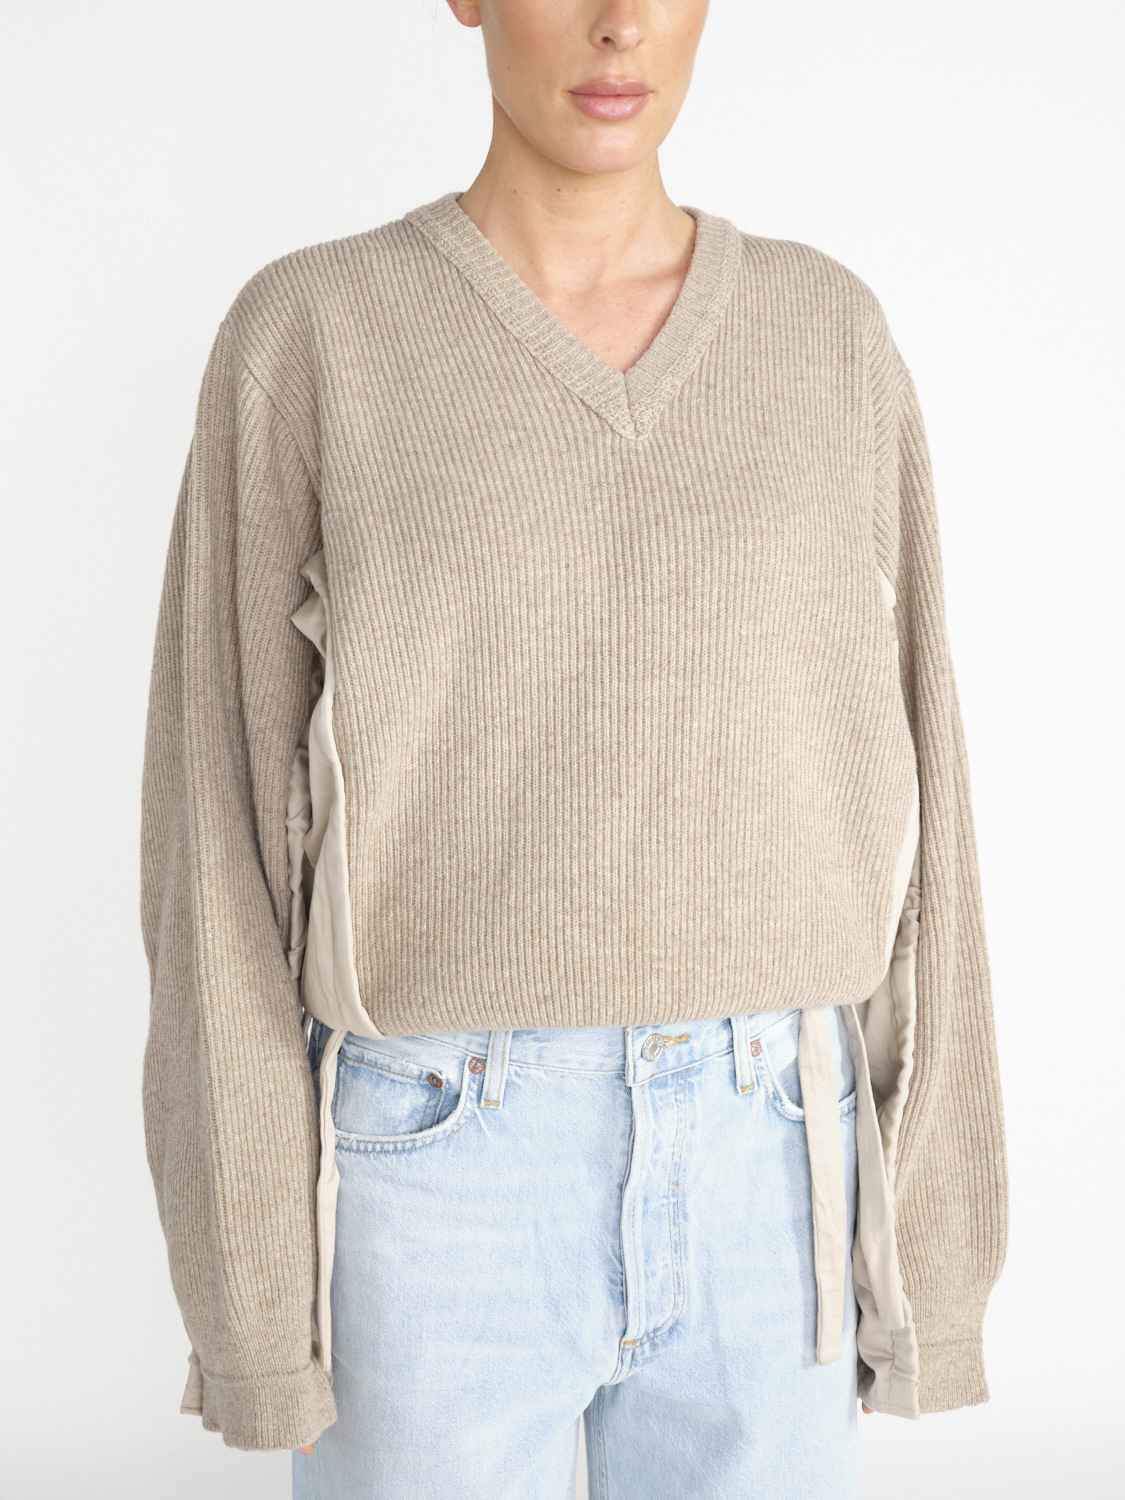 Woven – Pullover mit geschwungenen Ärmeln  